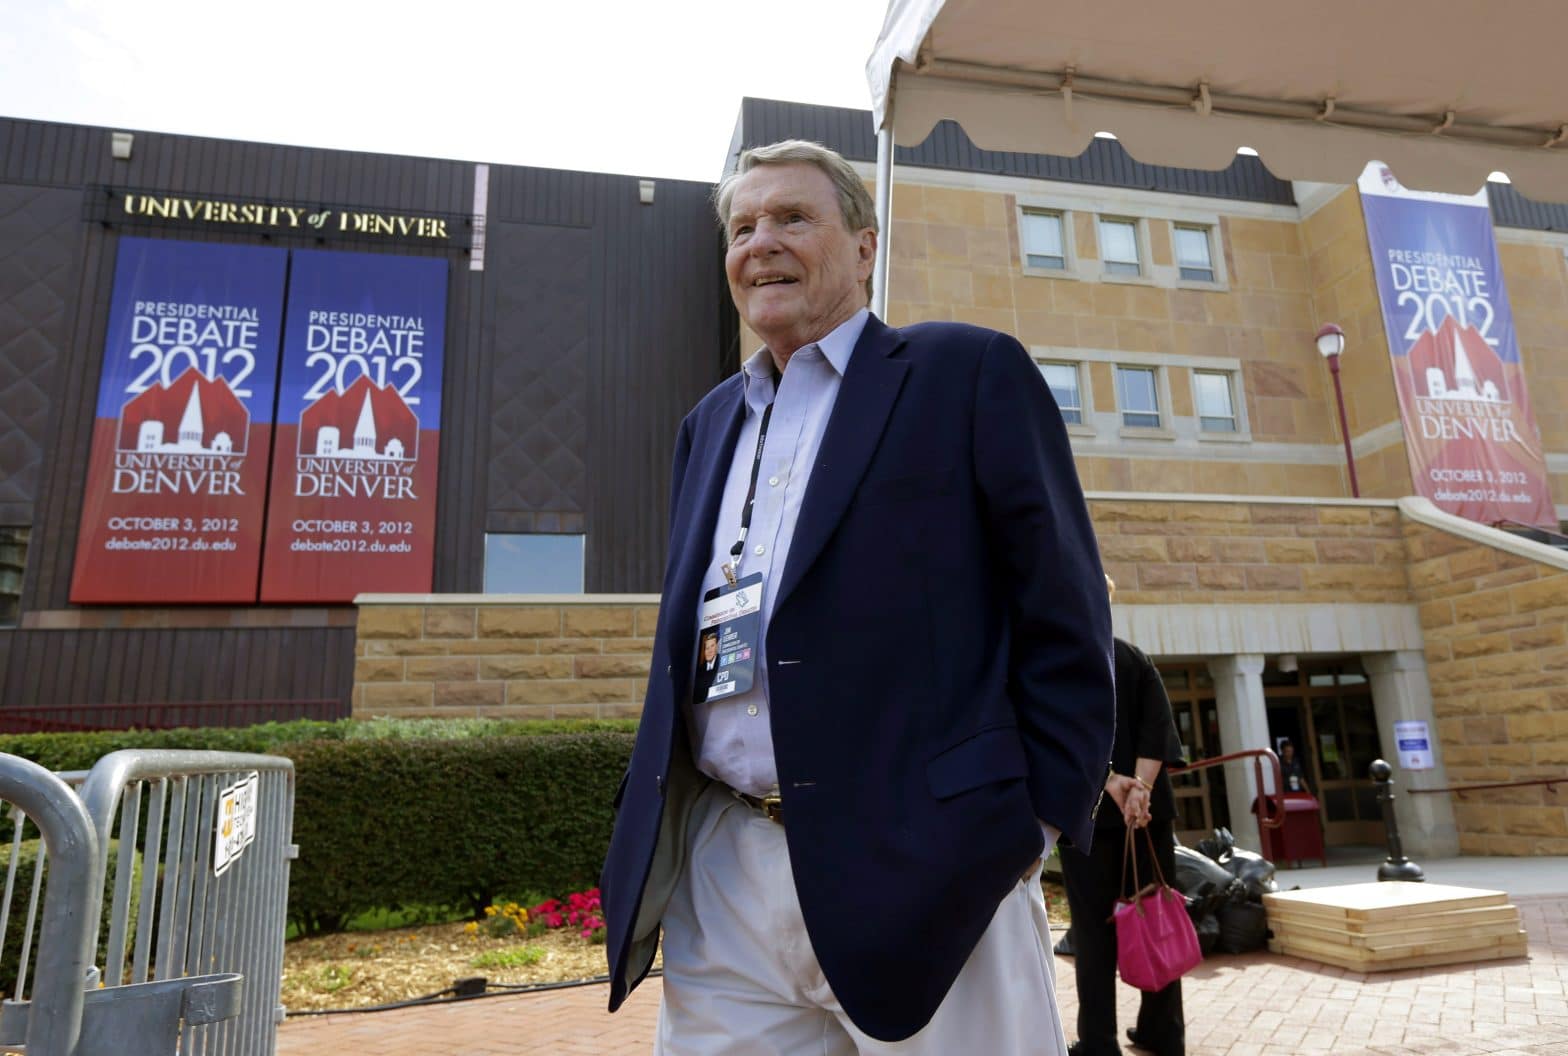 Jim Lehrer, Longtime PBS News Anchor and Fixture at Presidential Debates, Dies at 85